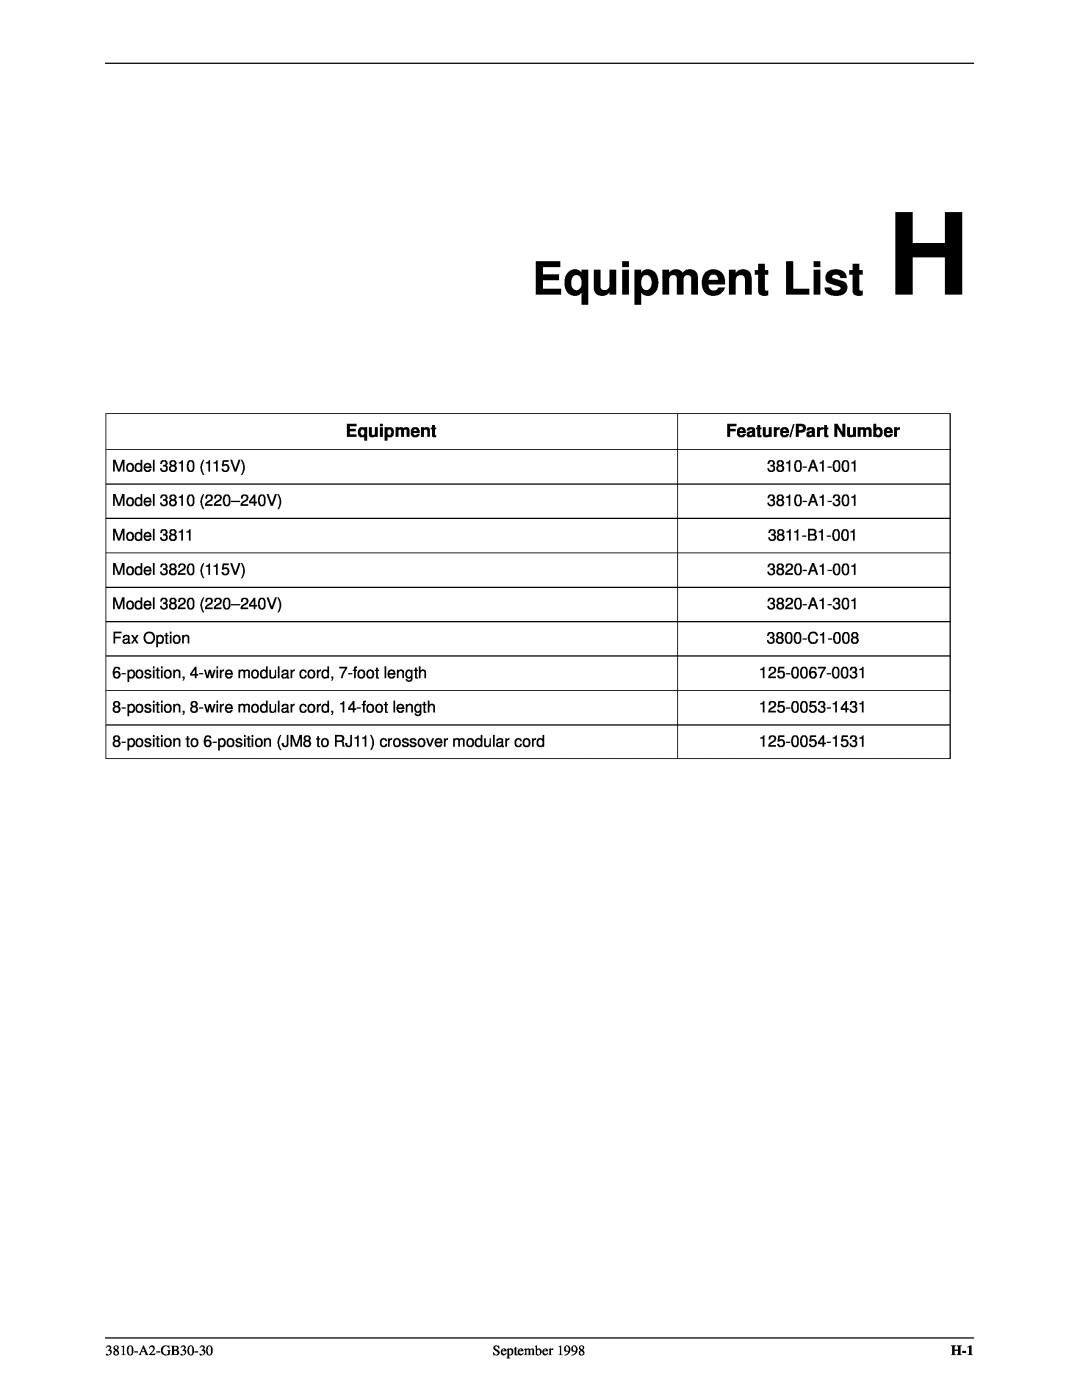 Paradyne 3800 manual Equipment List H, Feature/Part Number, 3810-A1-001, 3810-A1-301, 3811-B1-001, 3820-A1-001, 3820-A1-301 